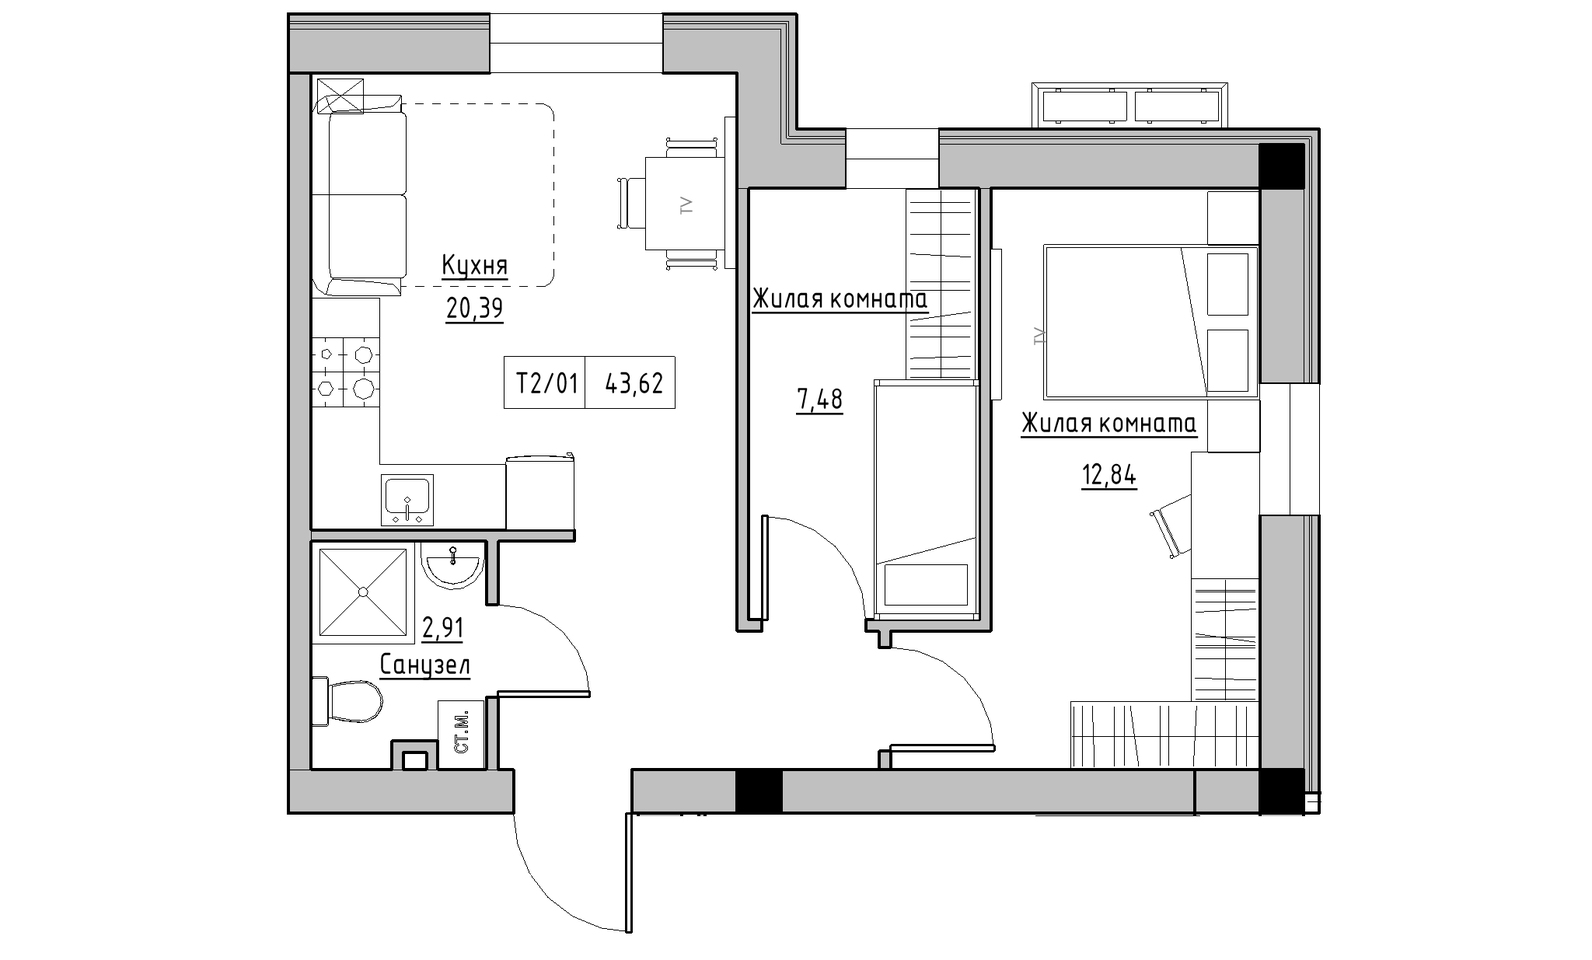 Planning 2-rm flats area 43.62m2, KS-014-01/0008.